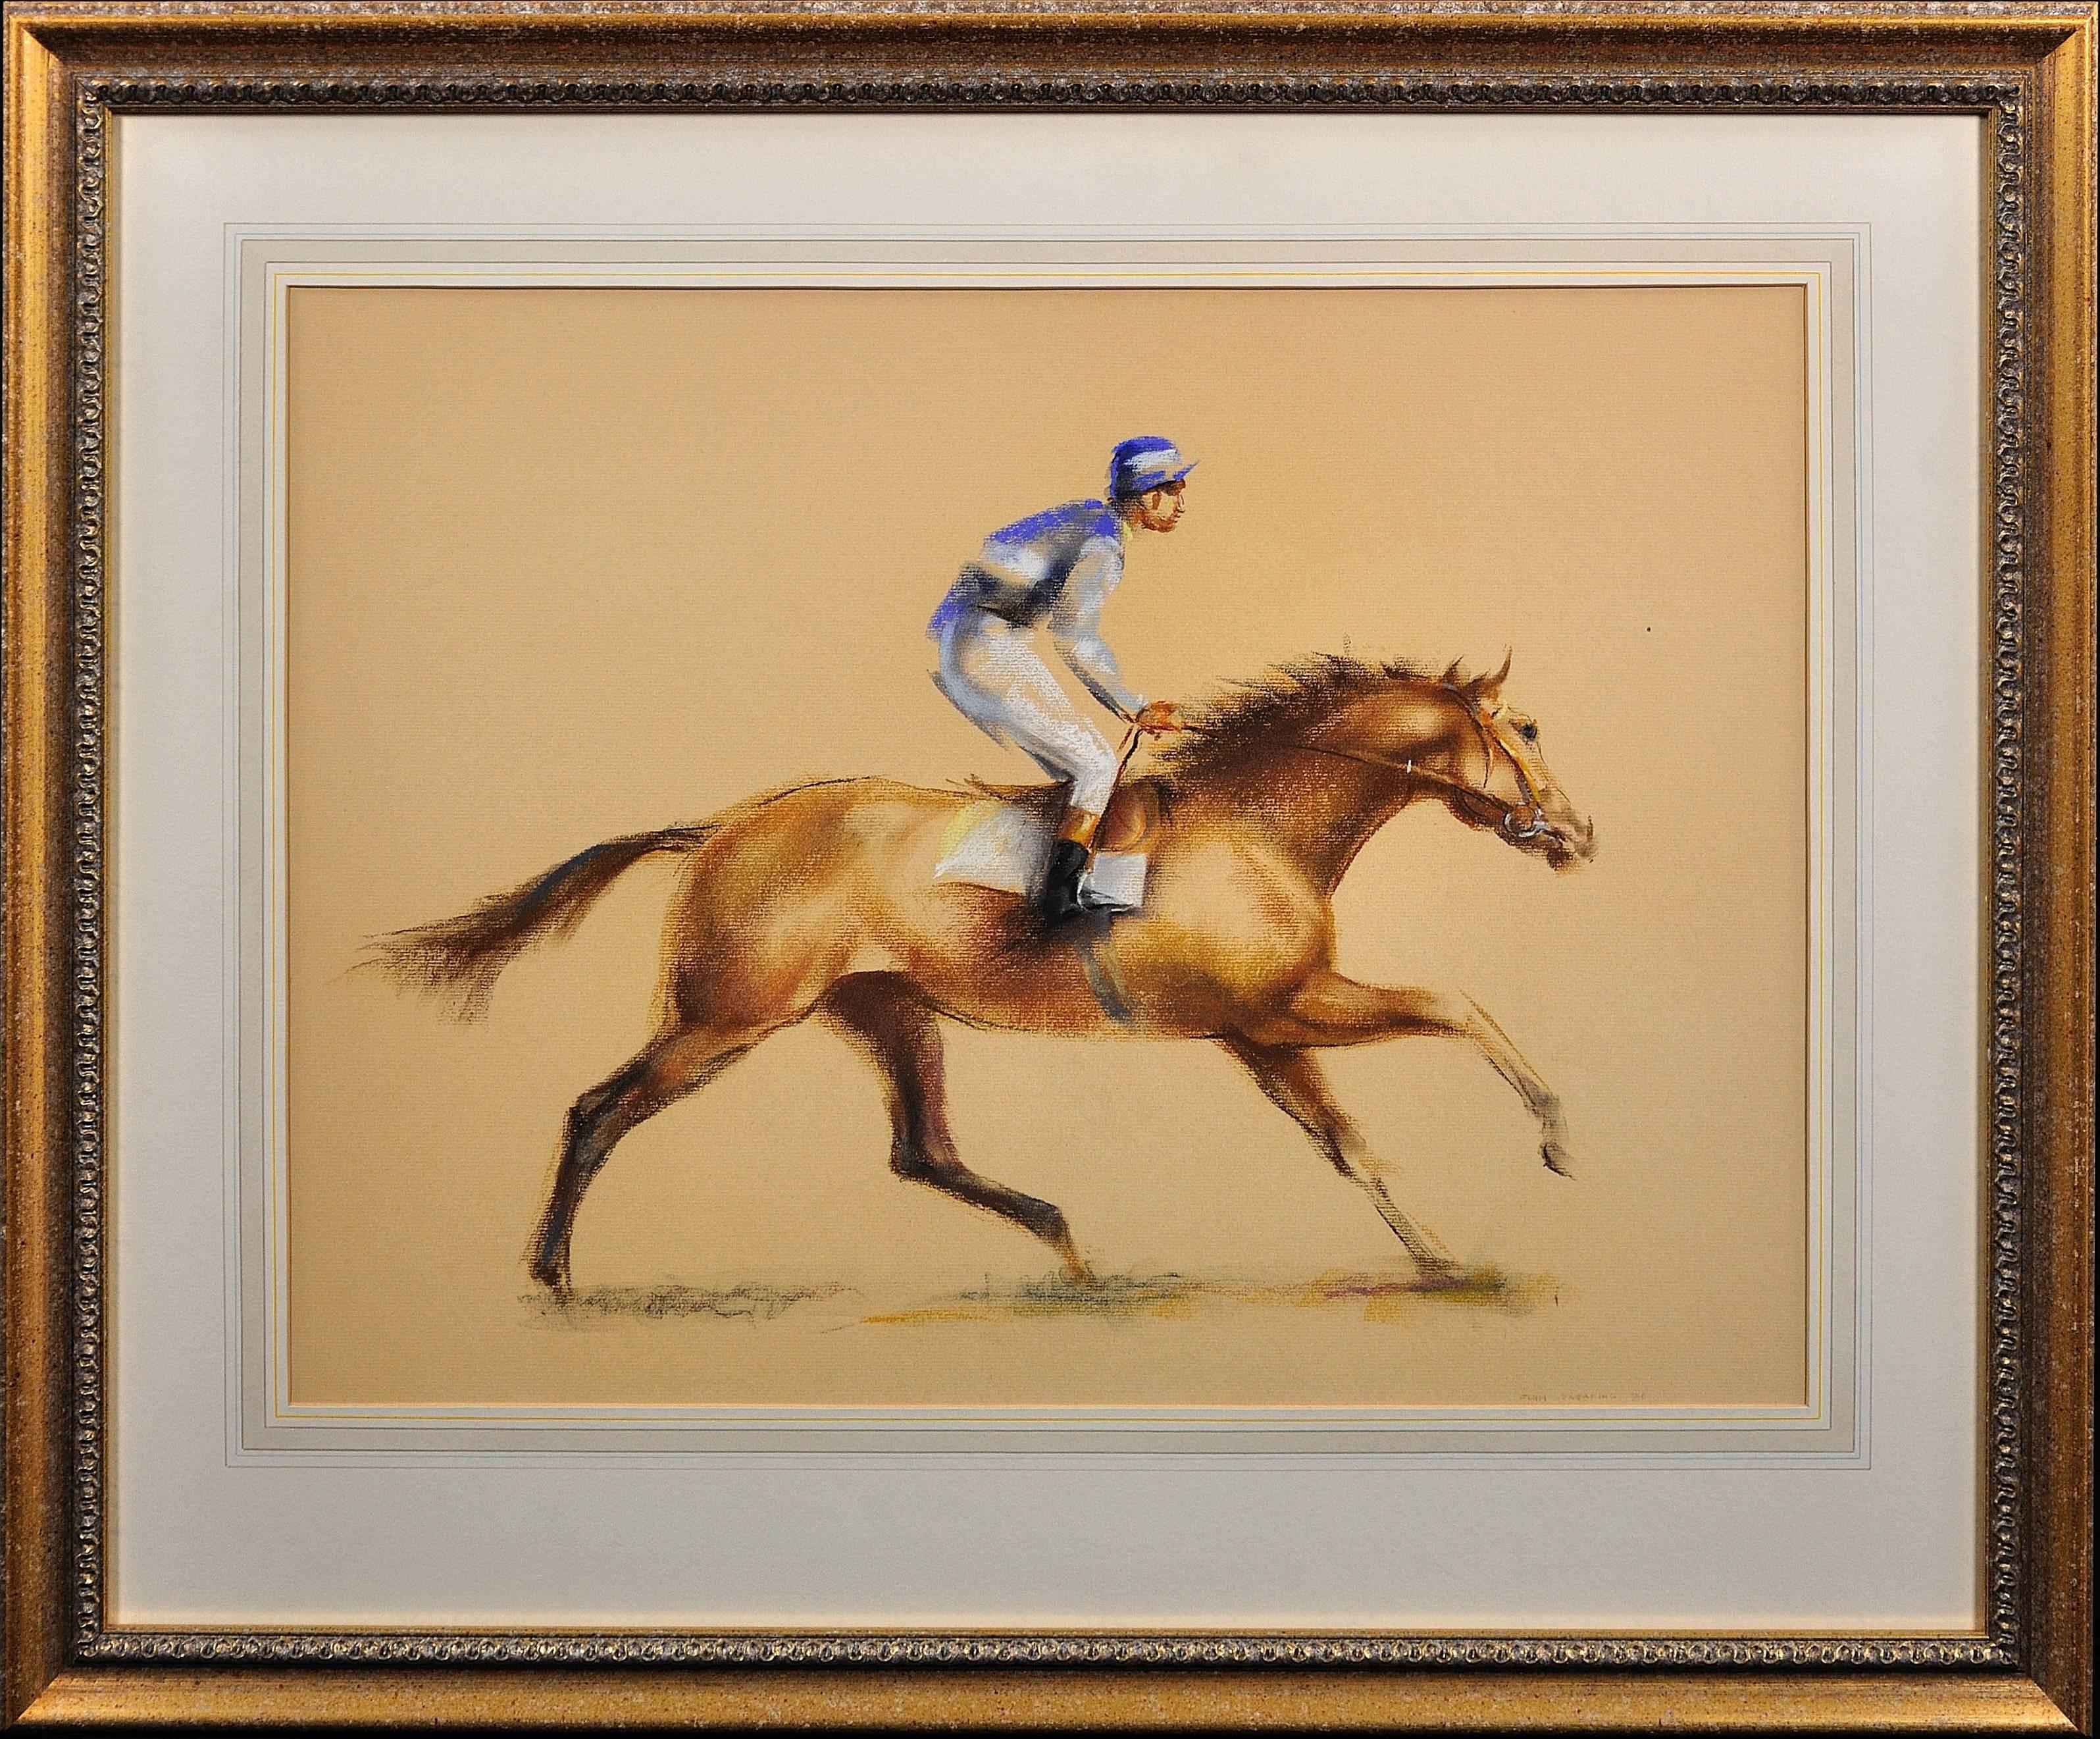 John Rattenbury Skeaping Animal Art - Racehorse and jockey